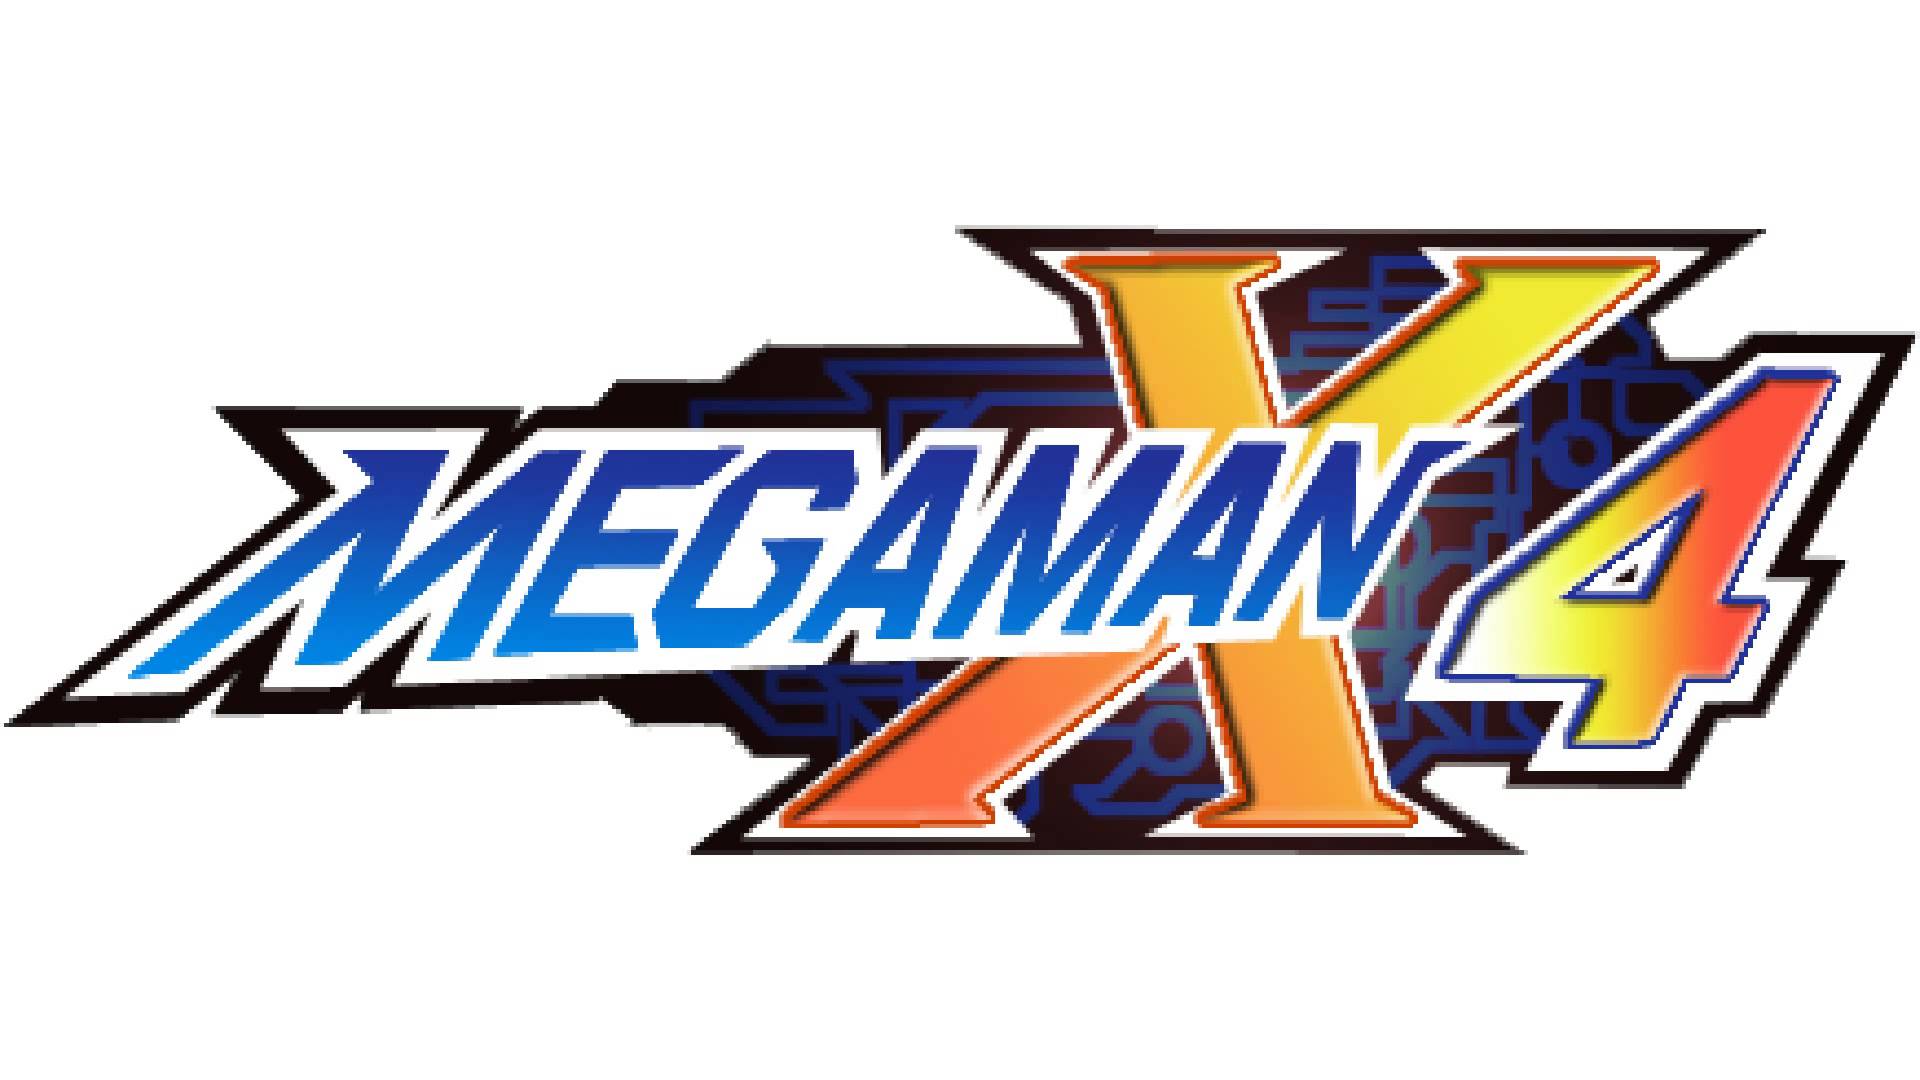 Mega Man X4 HD wallpapers, Desktop wallpaper - most viewed